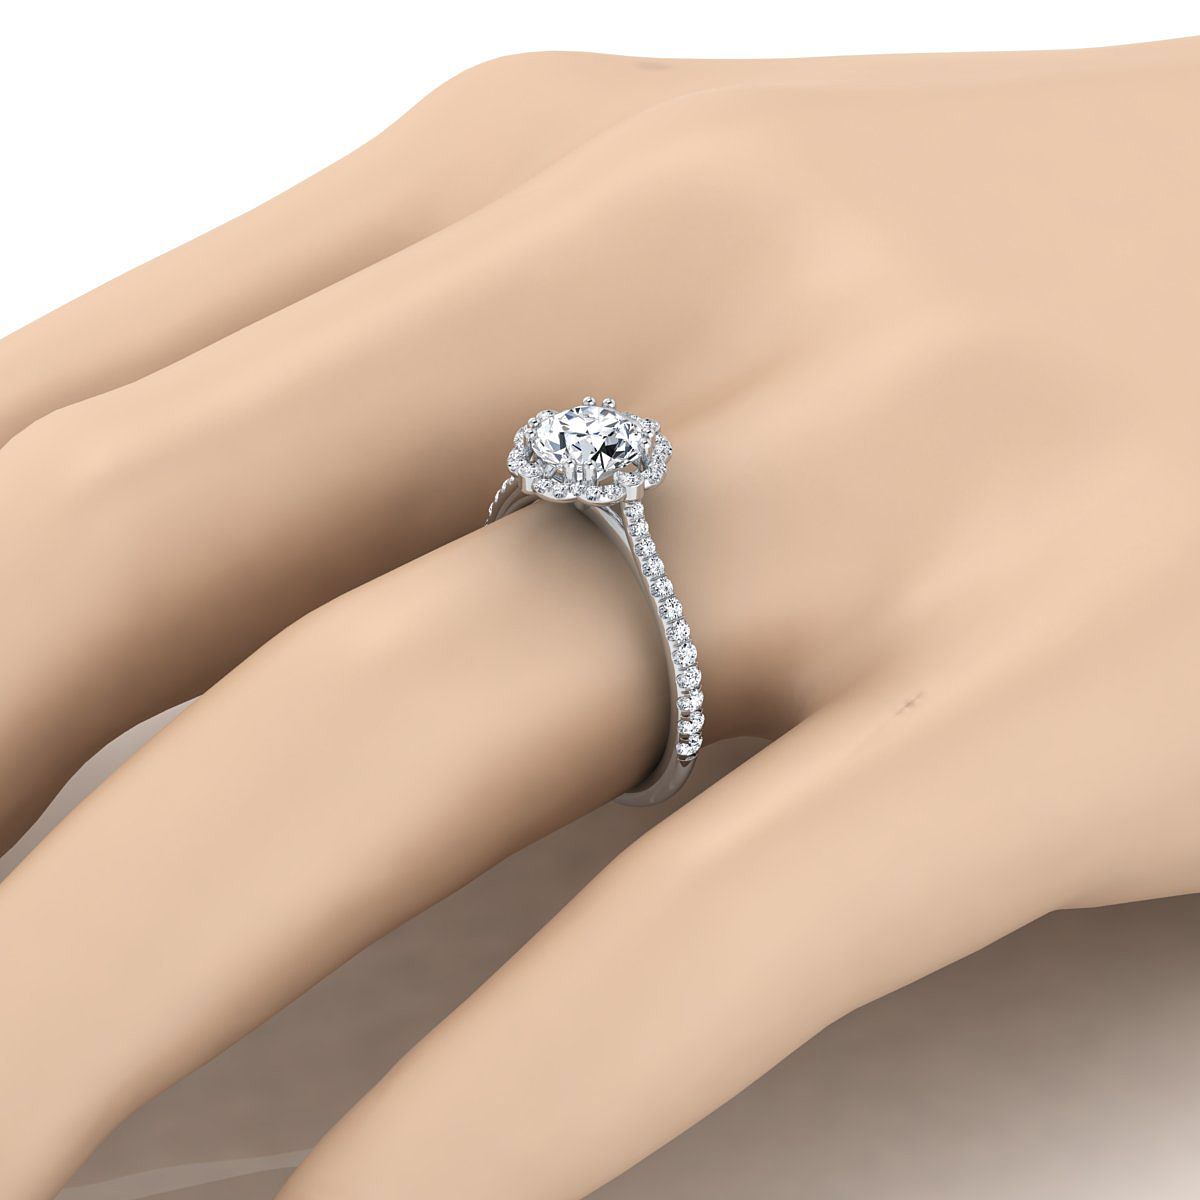 Platinum Round Brilliant Garnet Ornate Diamond Halo Vintage Inspired Engagement Ring -1/4ctw